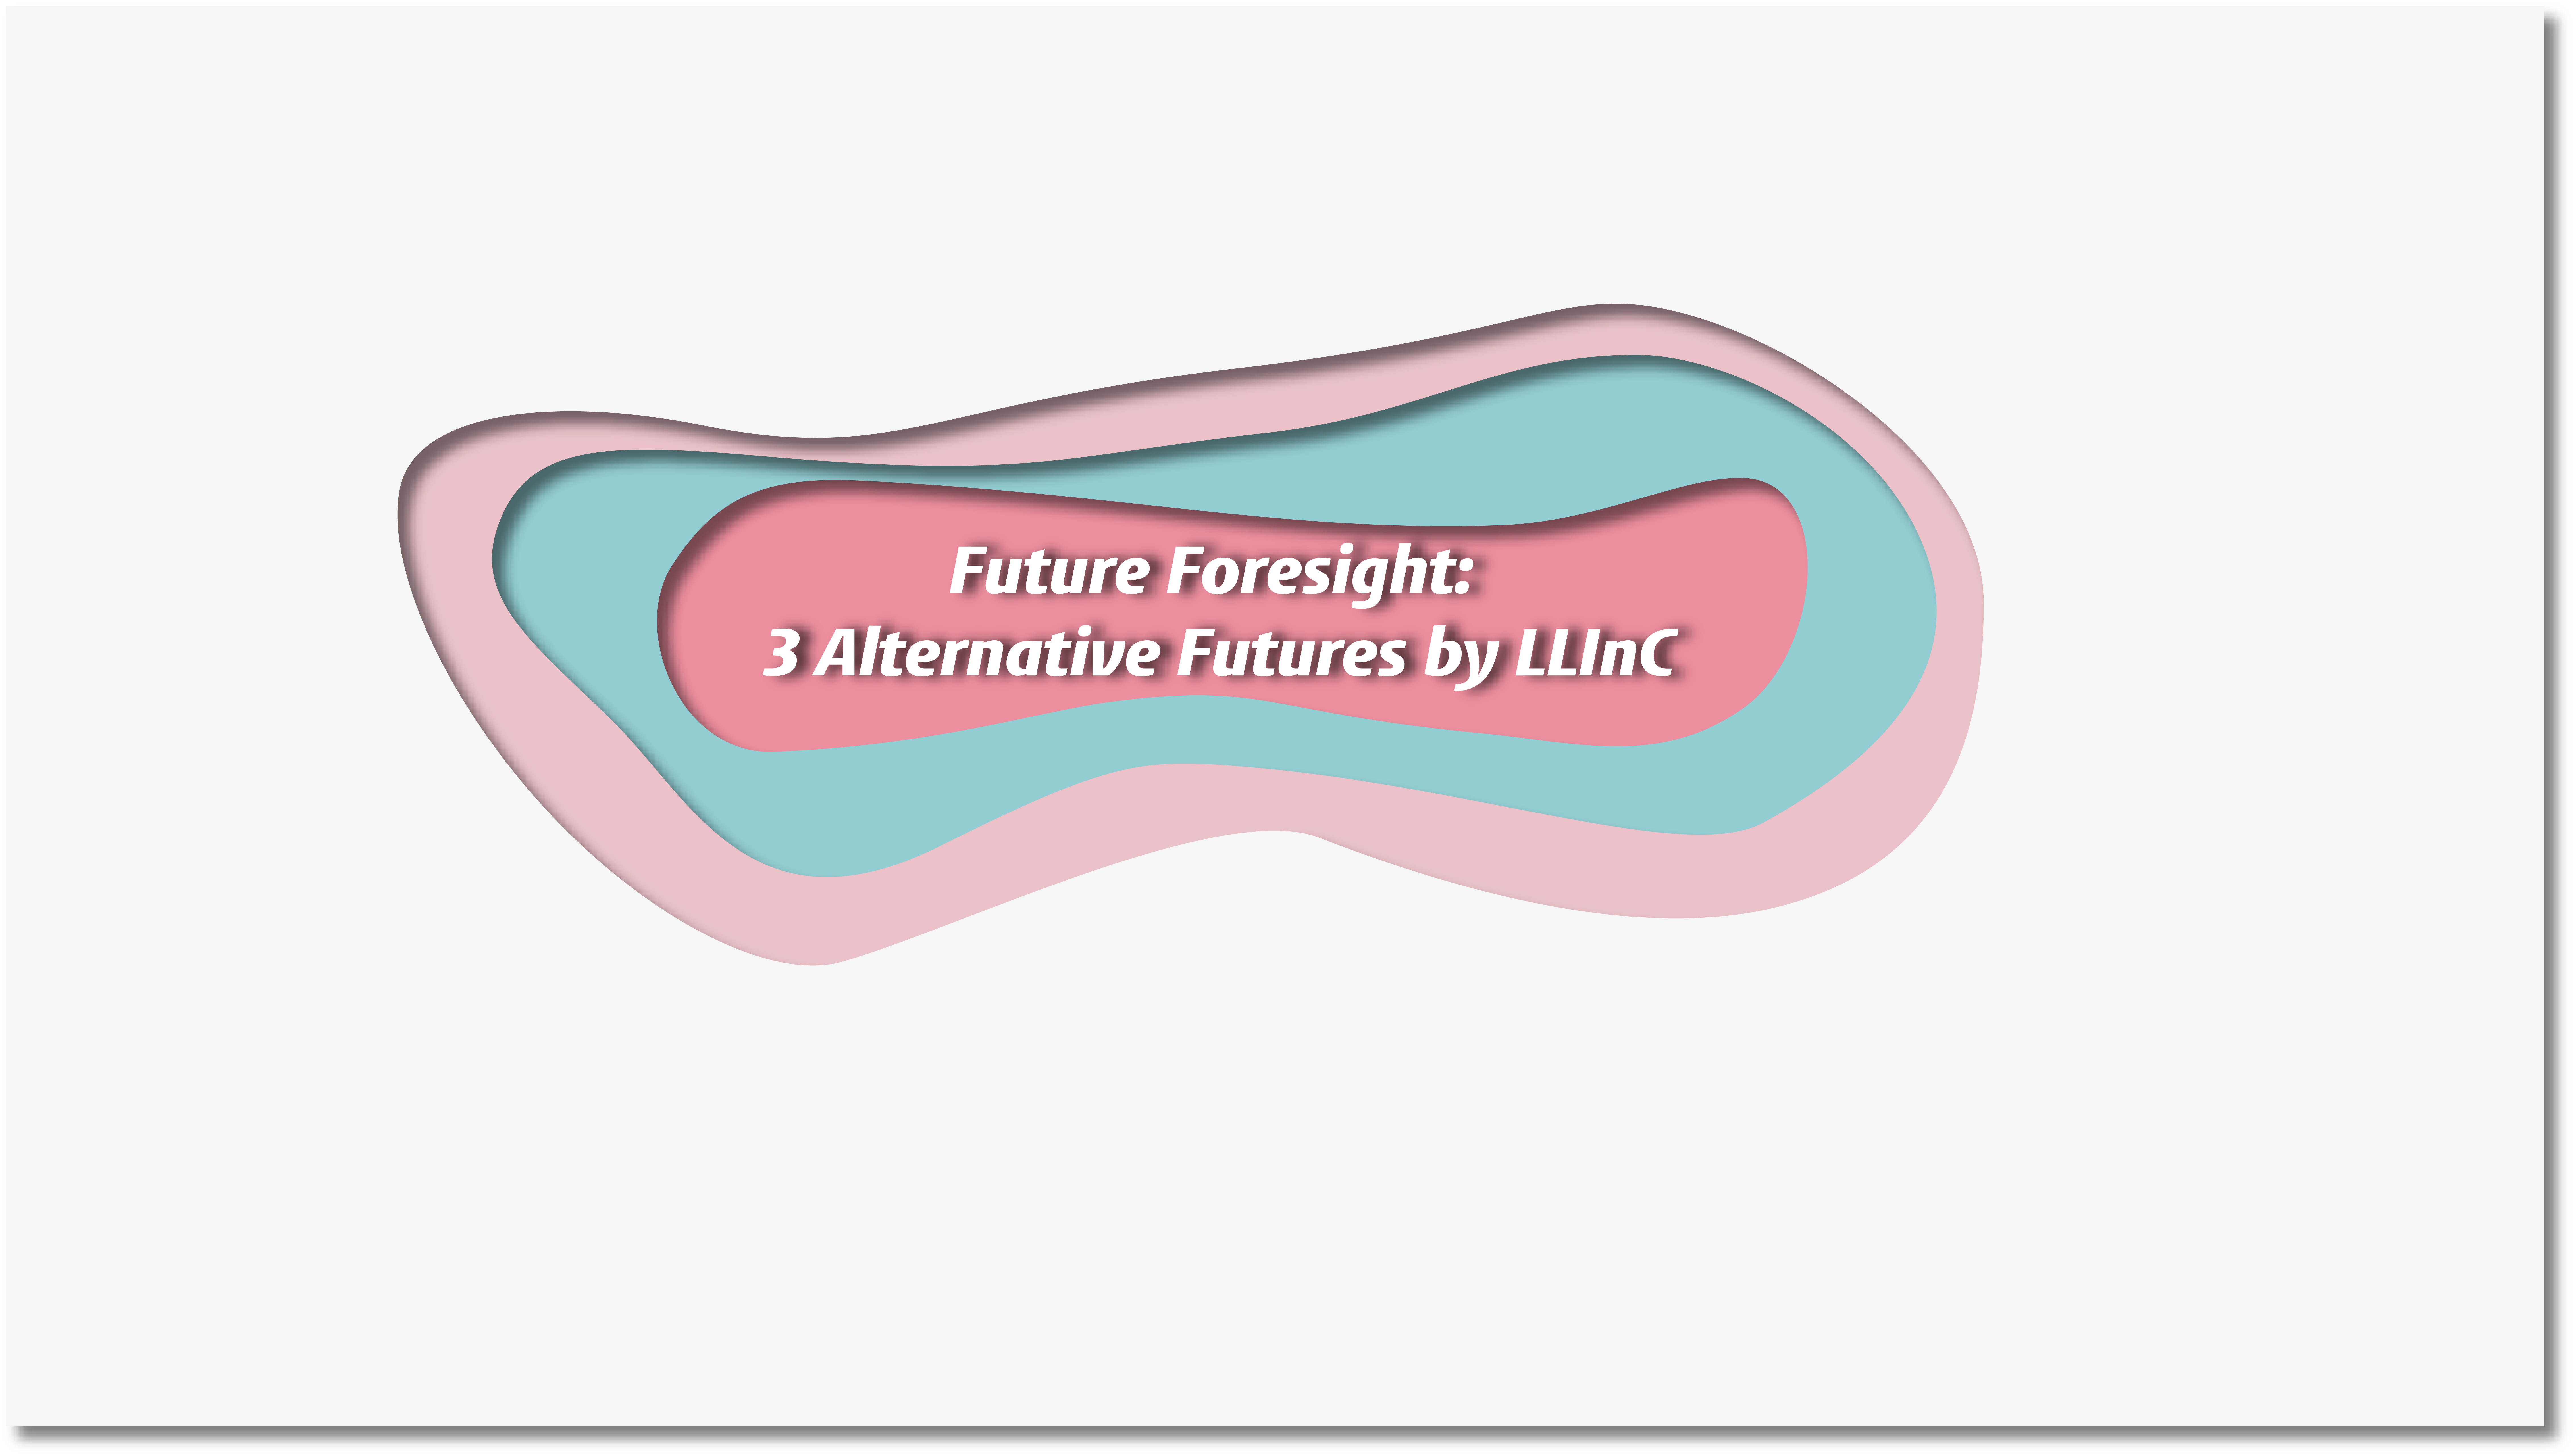 Future Foresight: 3 Alternative Futures by LLInC